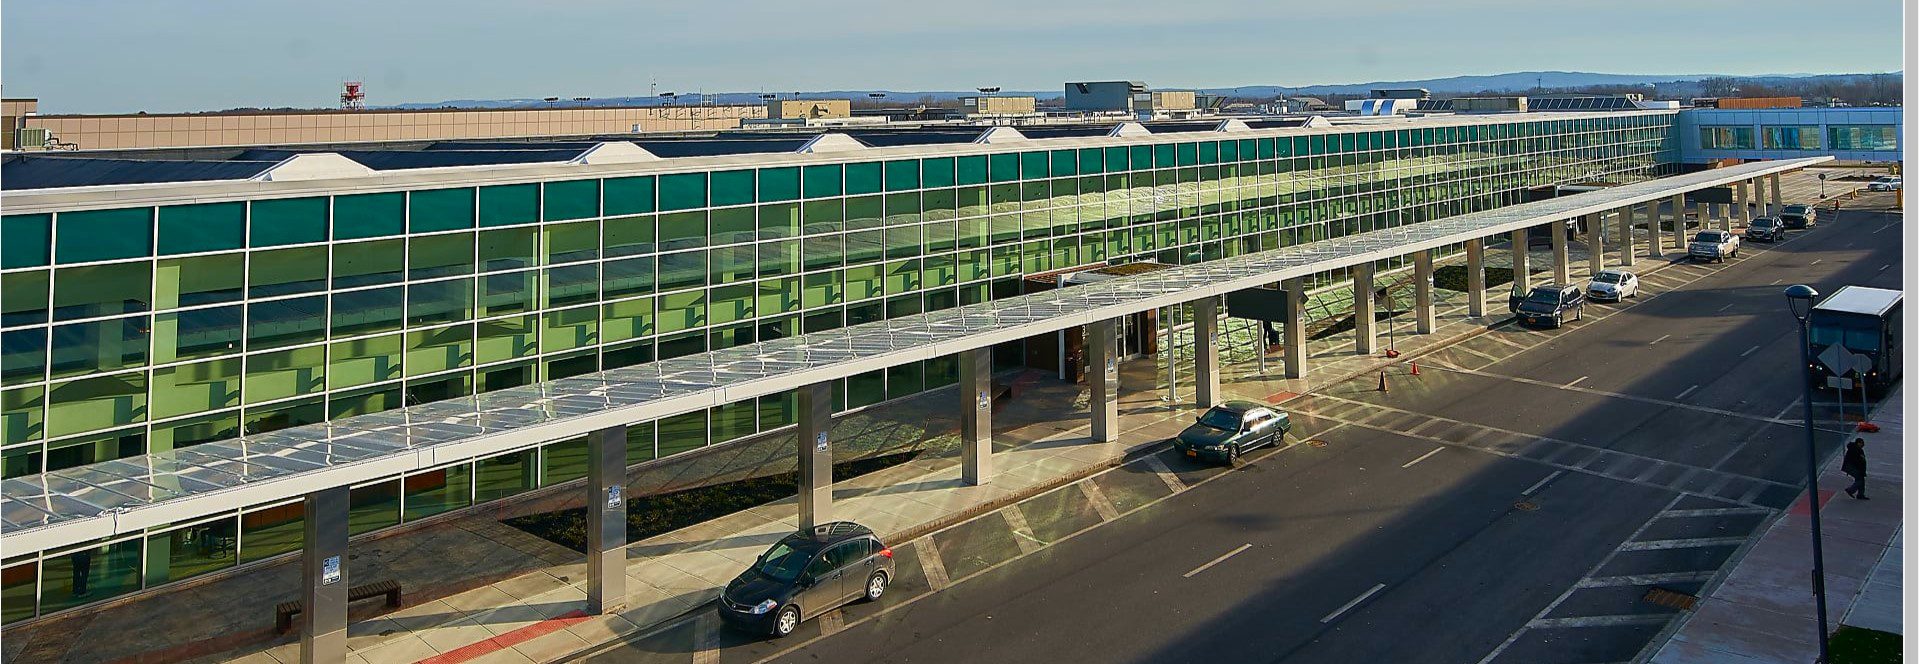 Rideshares & Taxis - Syracuse Hancock International Airport